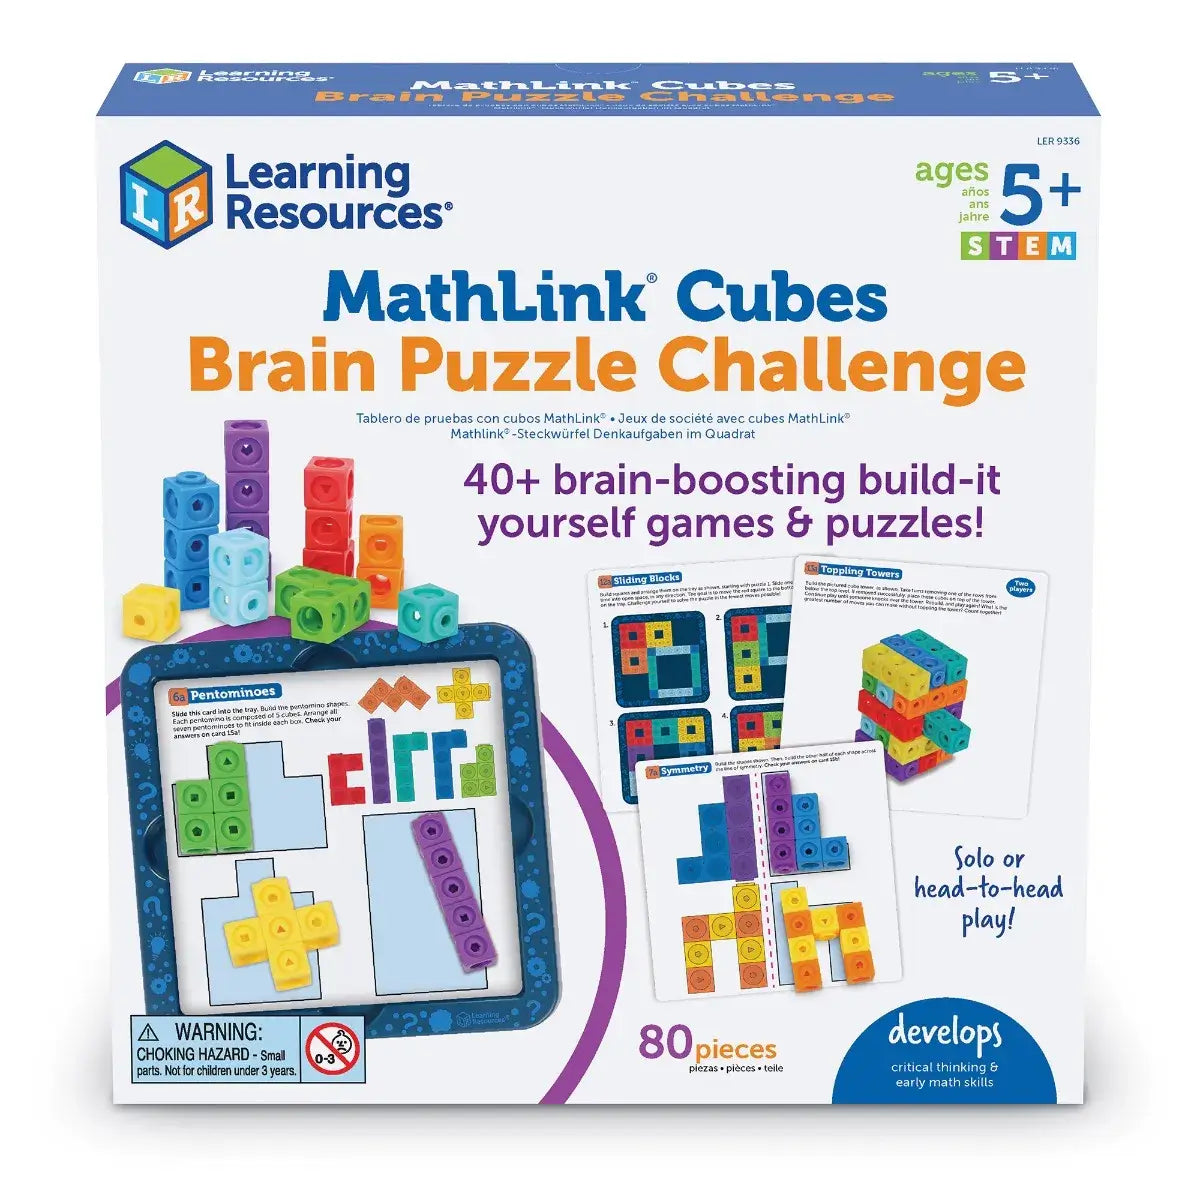 MathLink® Cubes Brain Puzzle Challenge